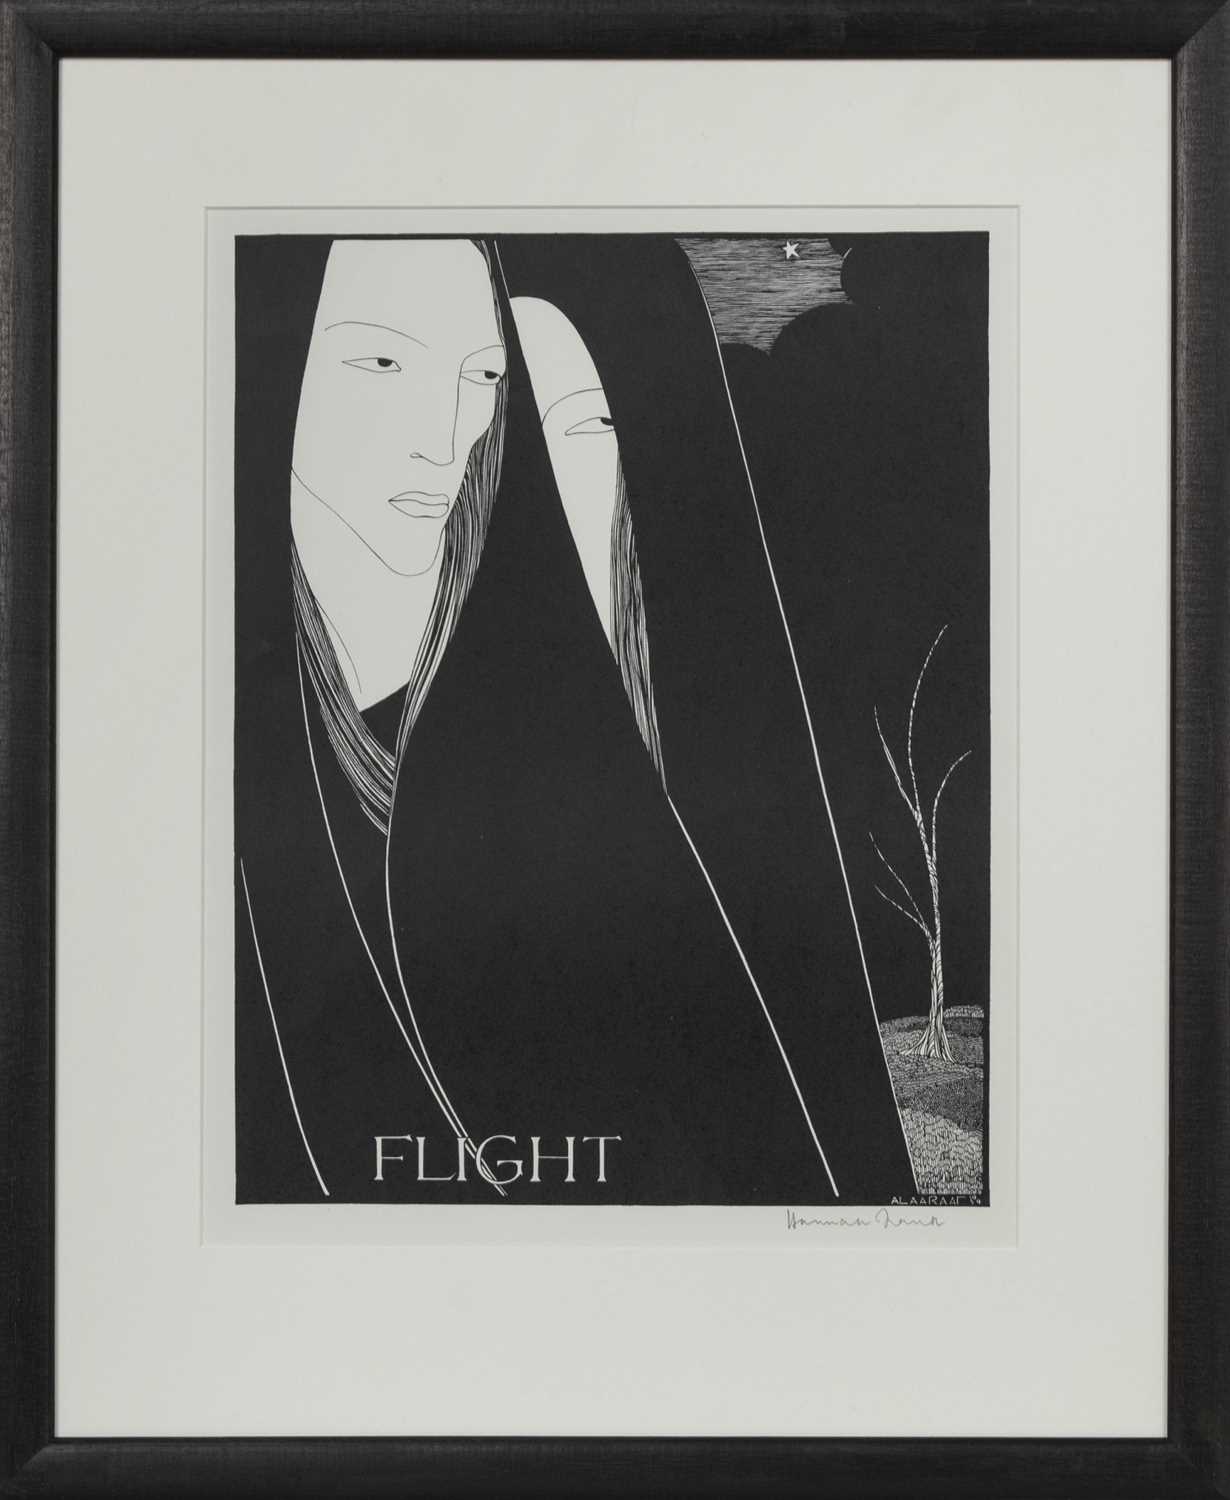 Lot 277 - FLIGHT, 1939, A LITHOGRAPH BY HANNAH FRANK